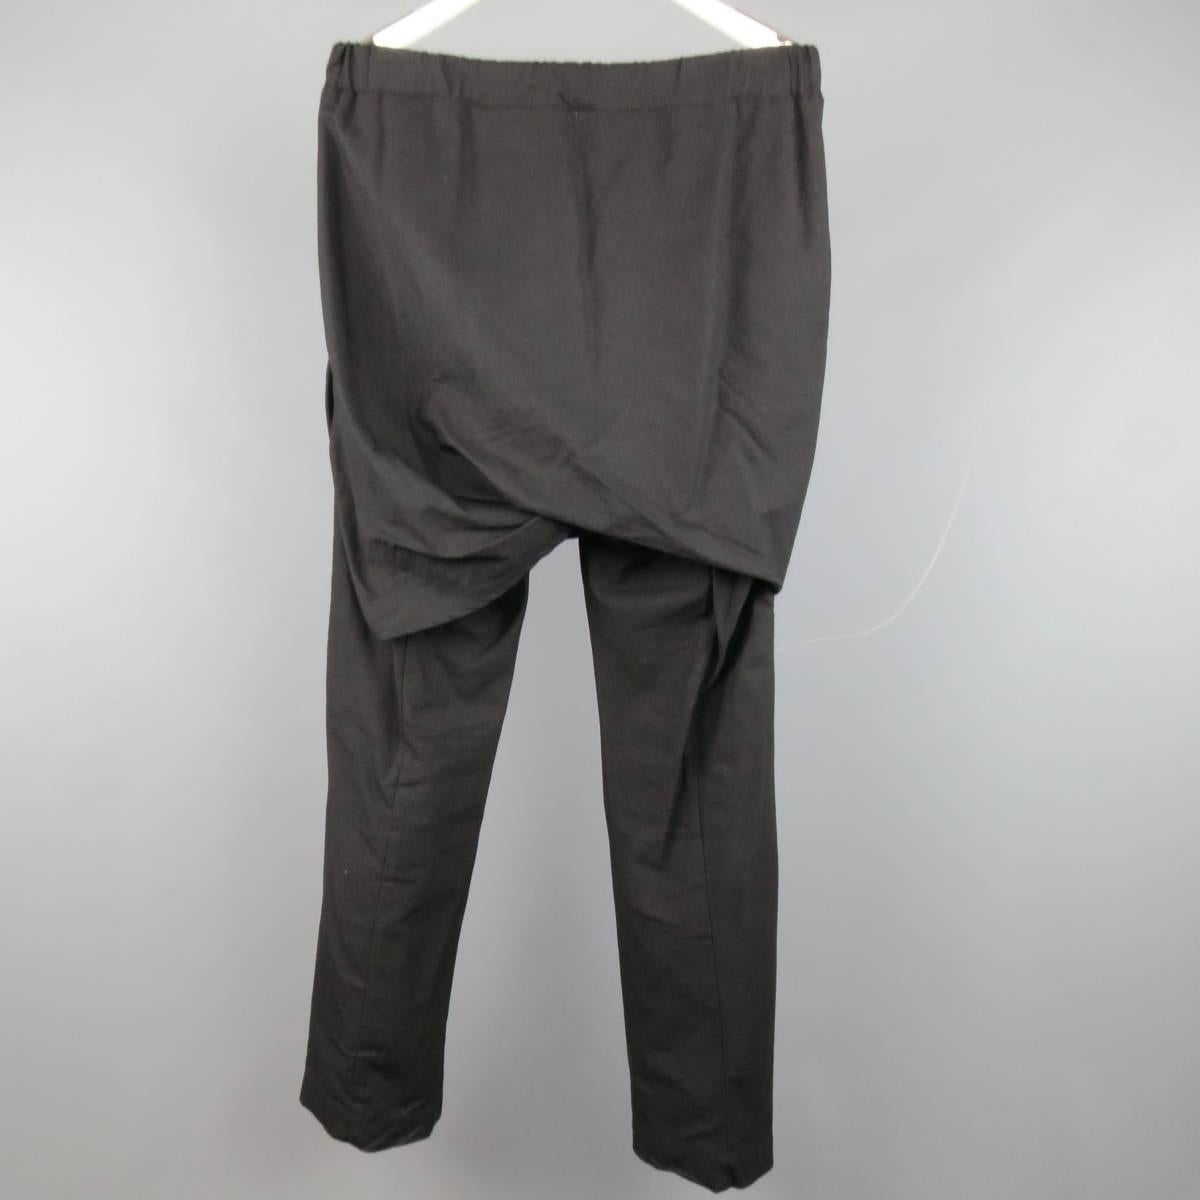 THAMANYAH Size 30 Black Solid Wool Blend Skirt Overlay Dress Pants 2